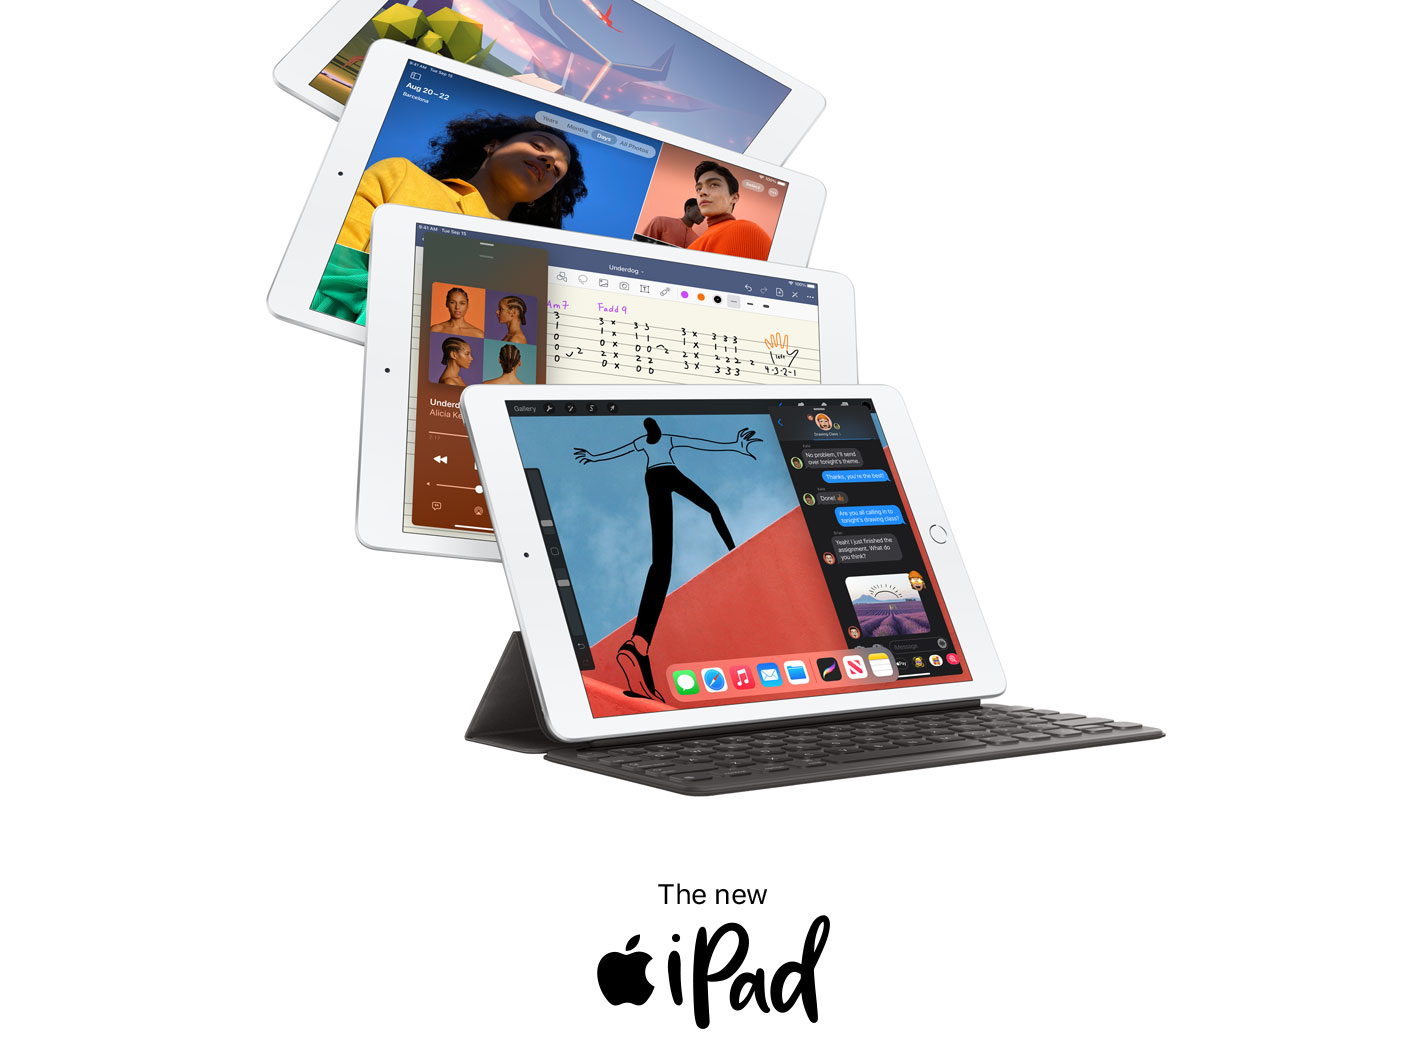 The new Apple iPad